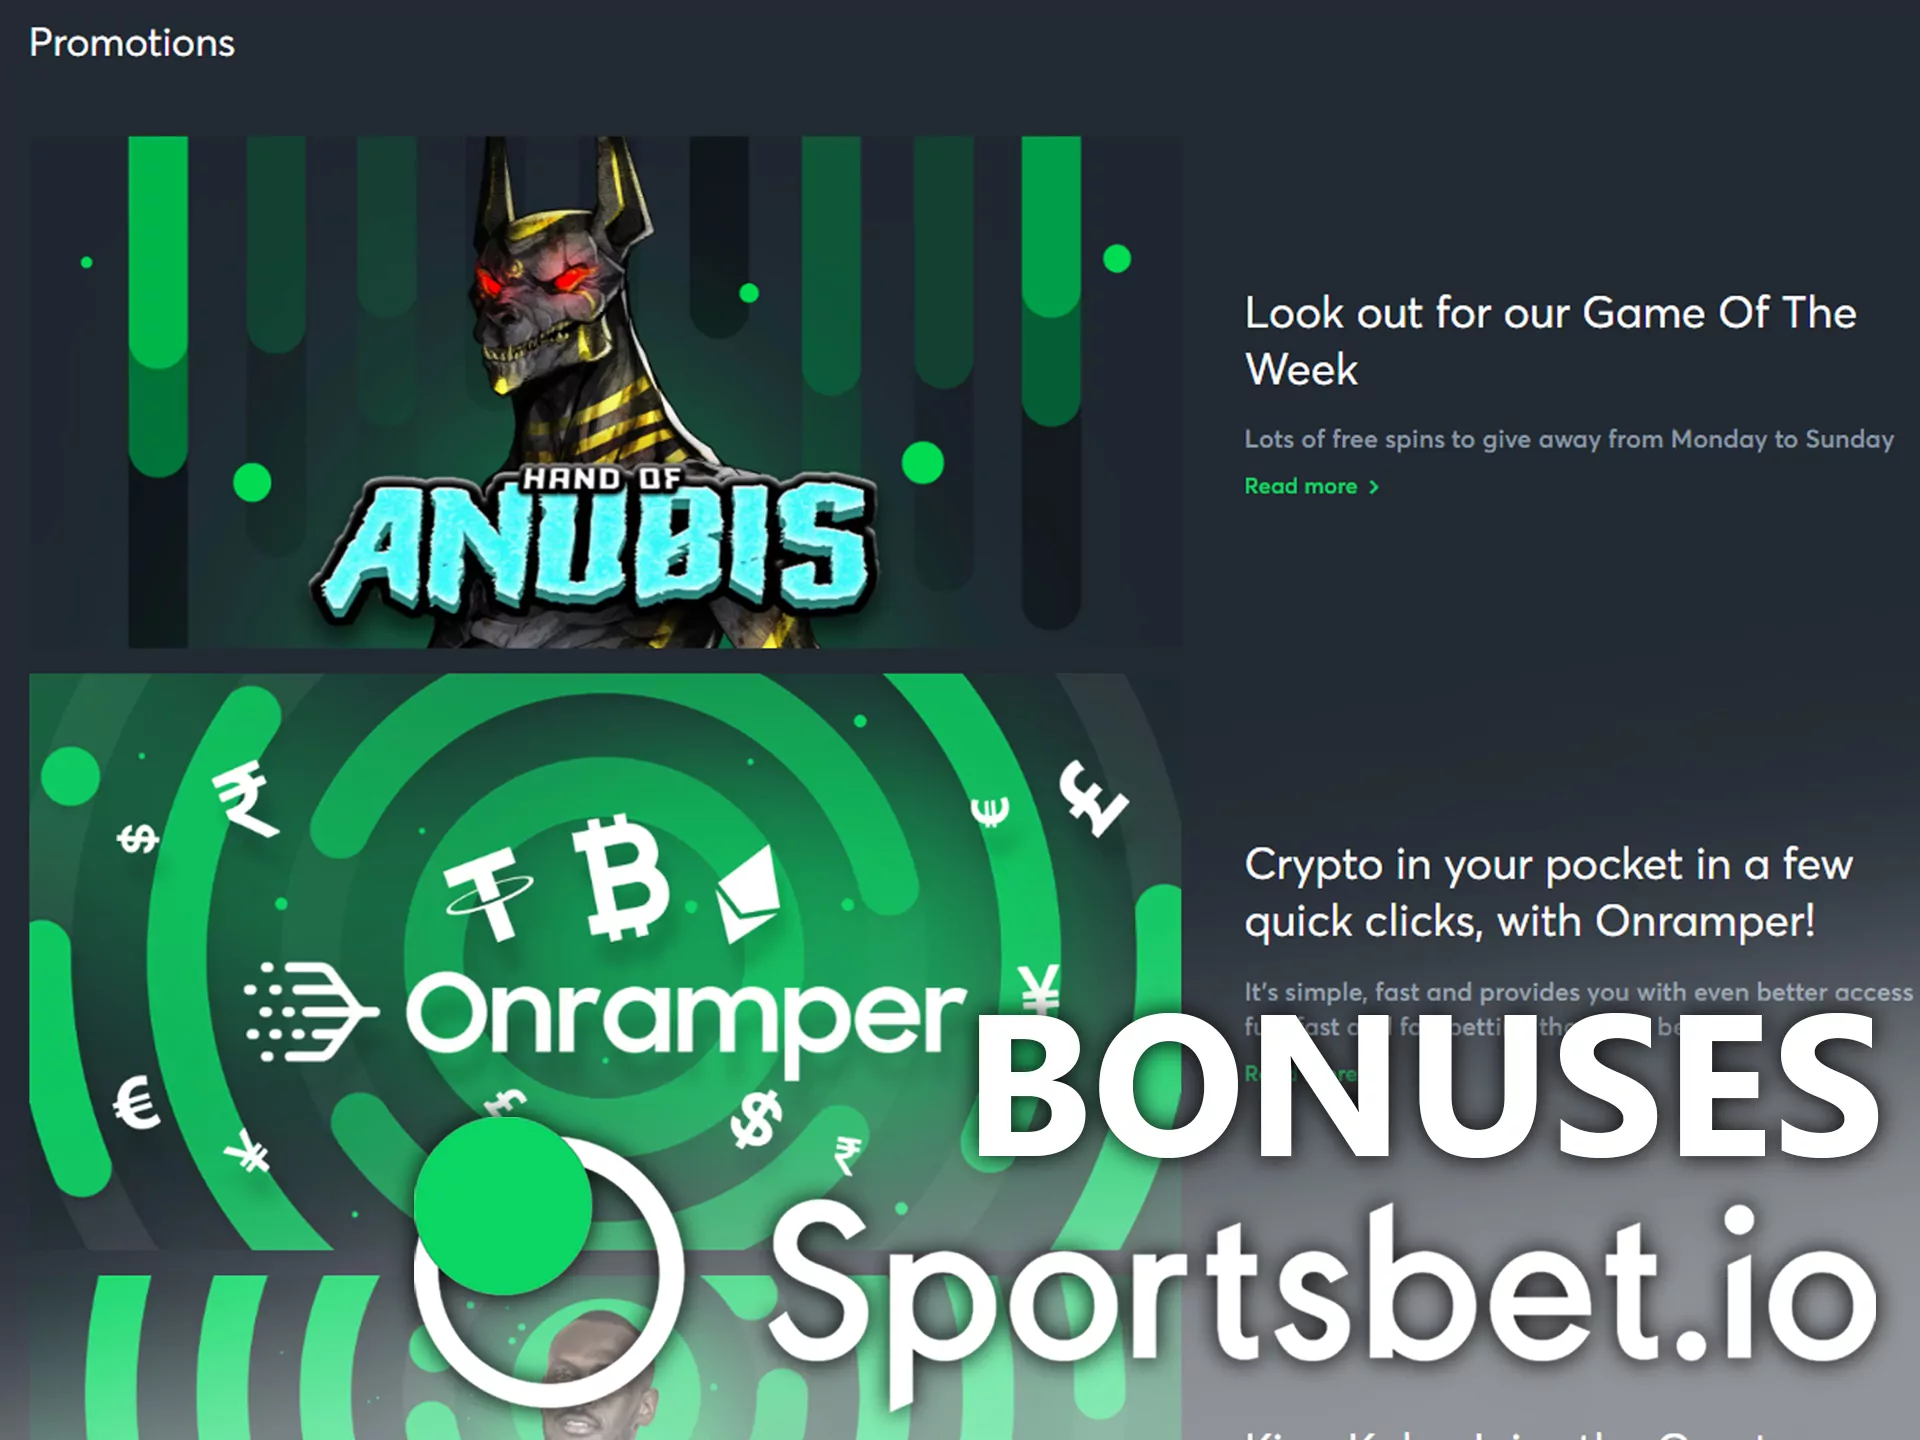 Sportsbet offers a lot of profitable bonuses.